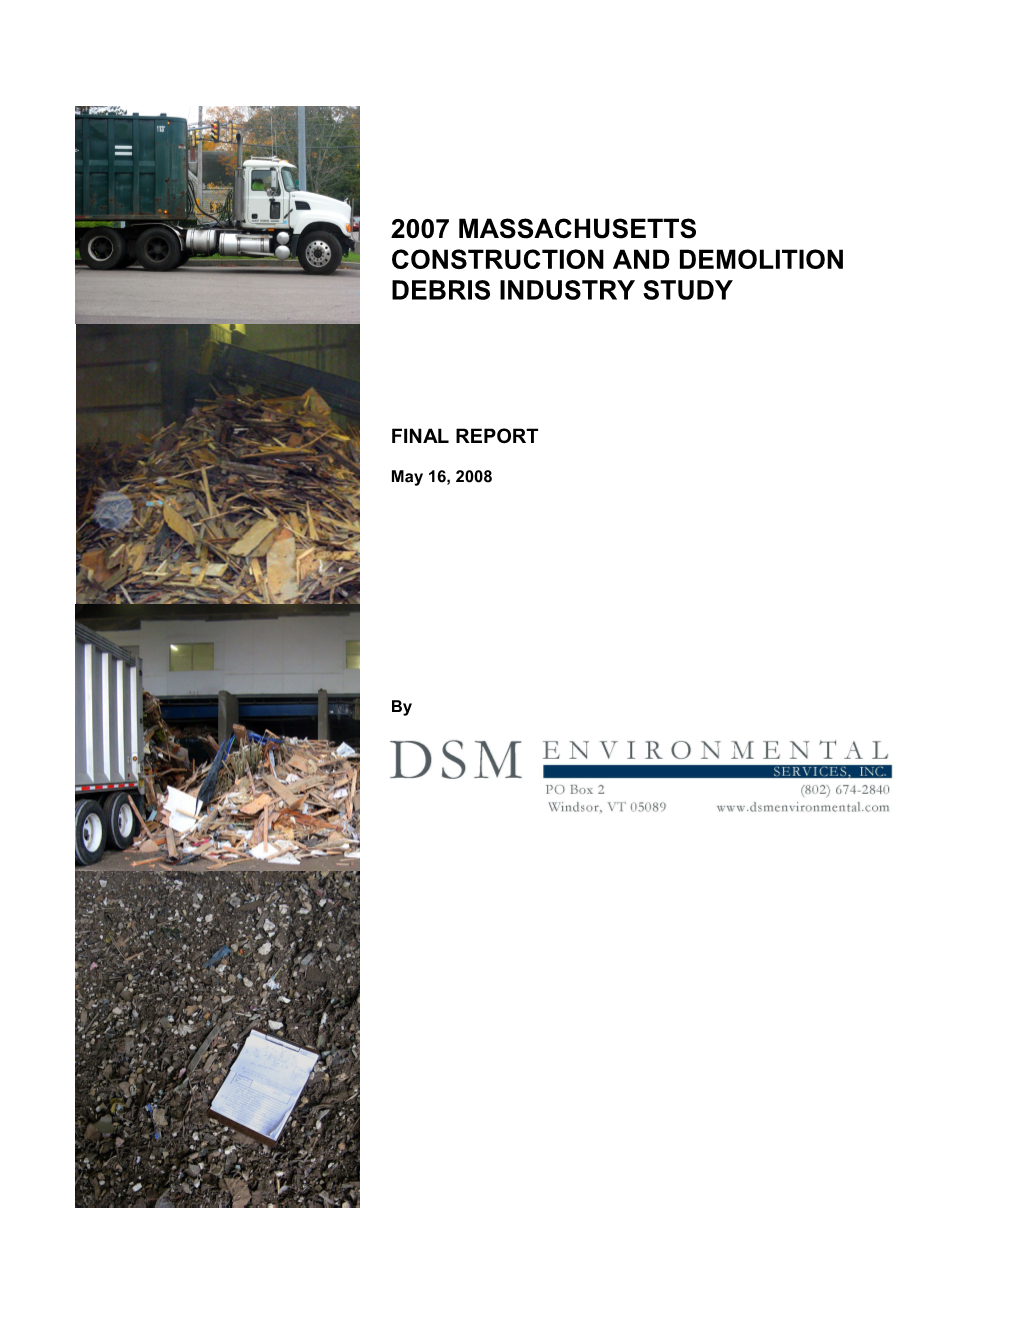 Construction and Demolition Debris Industry Study